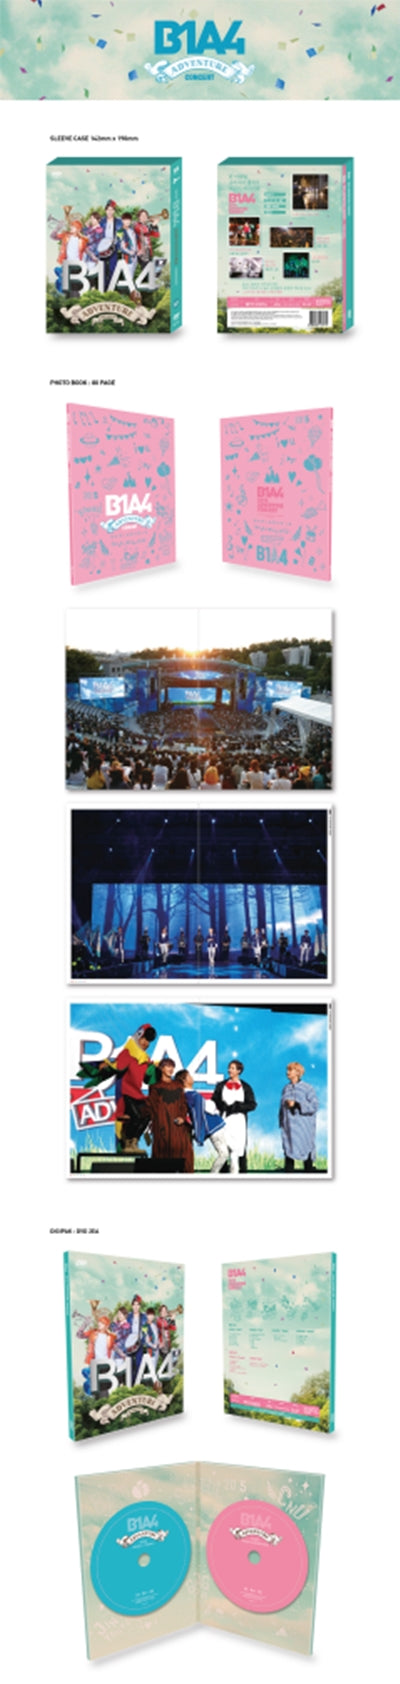 B1A4 - [2015 B1A4 ADVENTURE DVD] 2 DISC+80p Photo Book K-POP Sealed